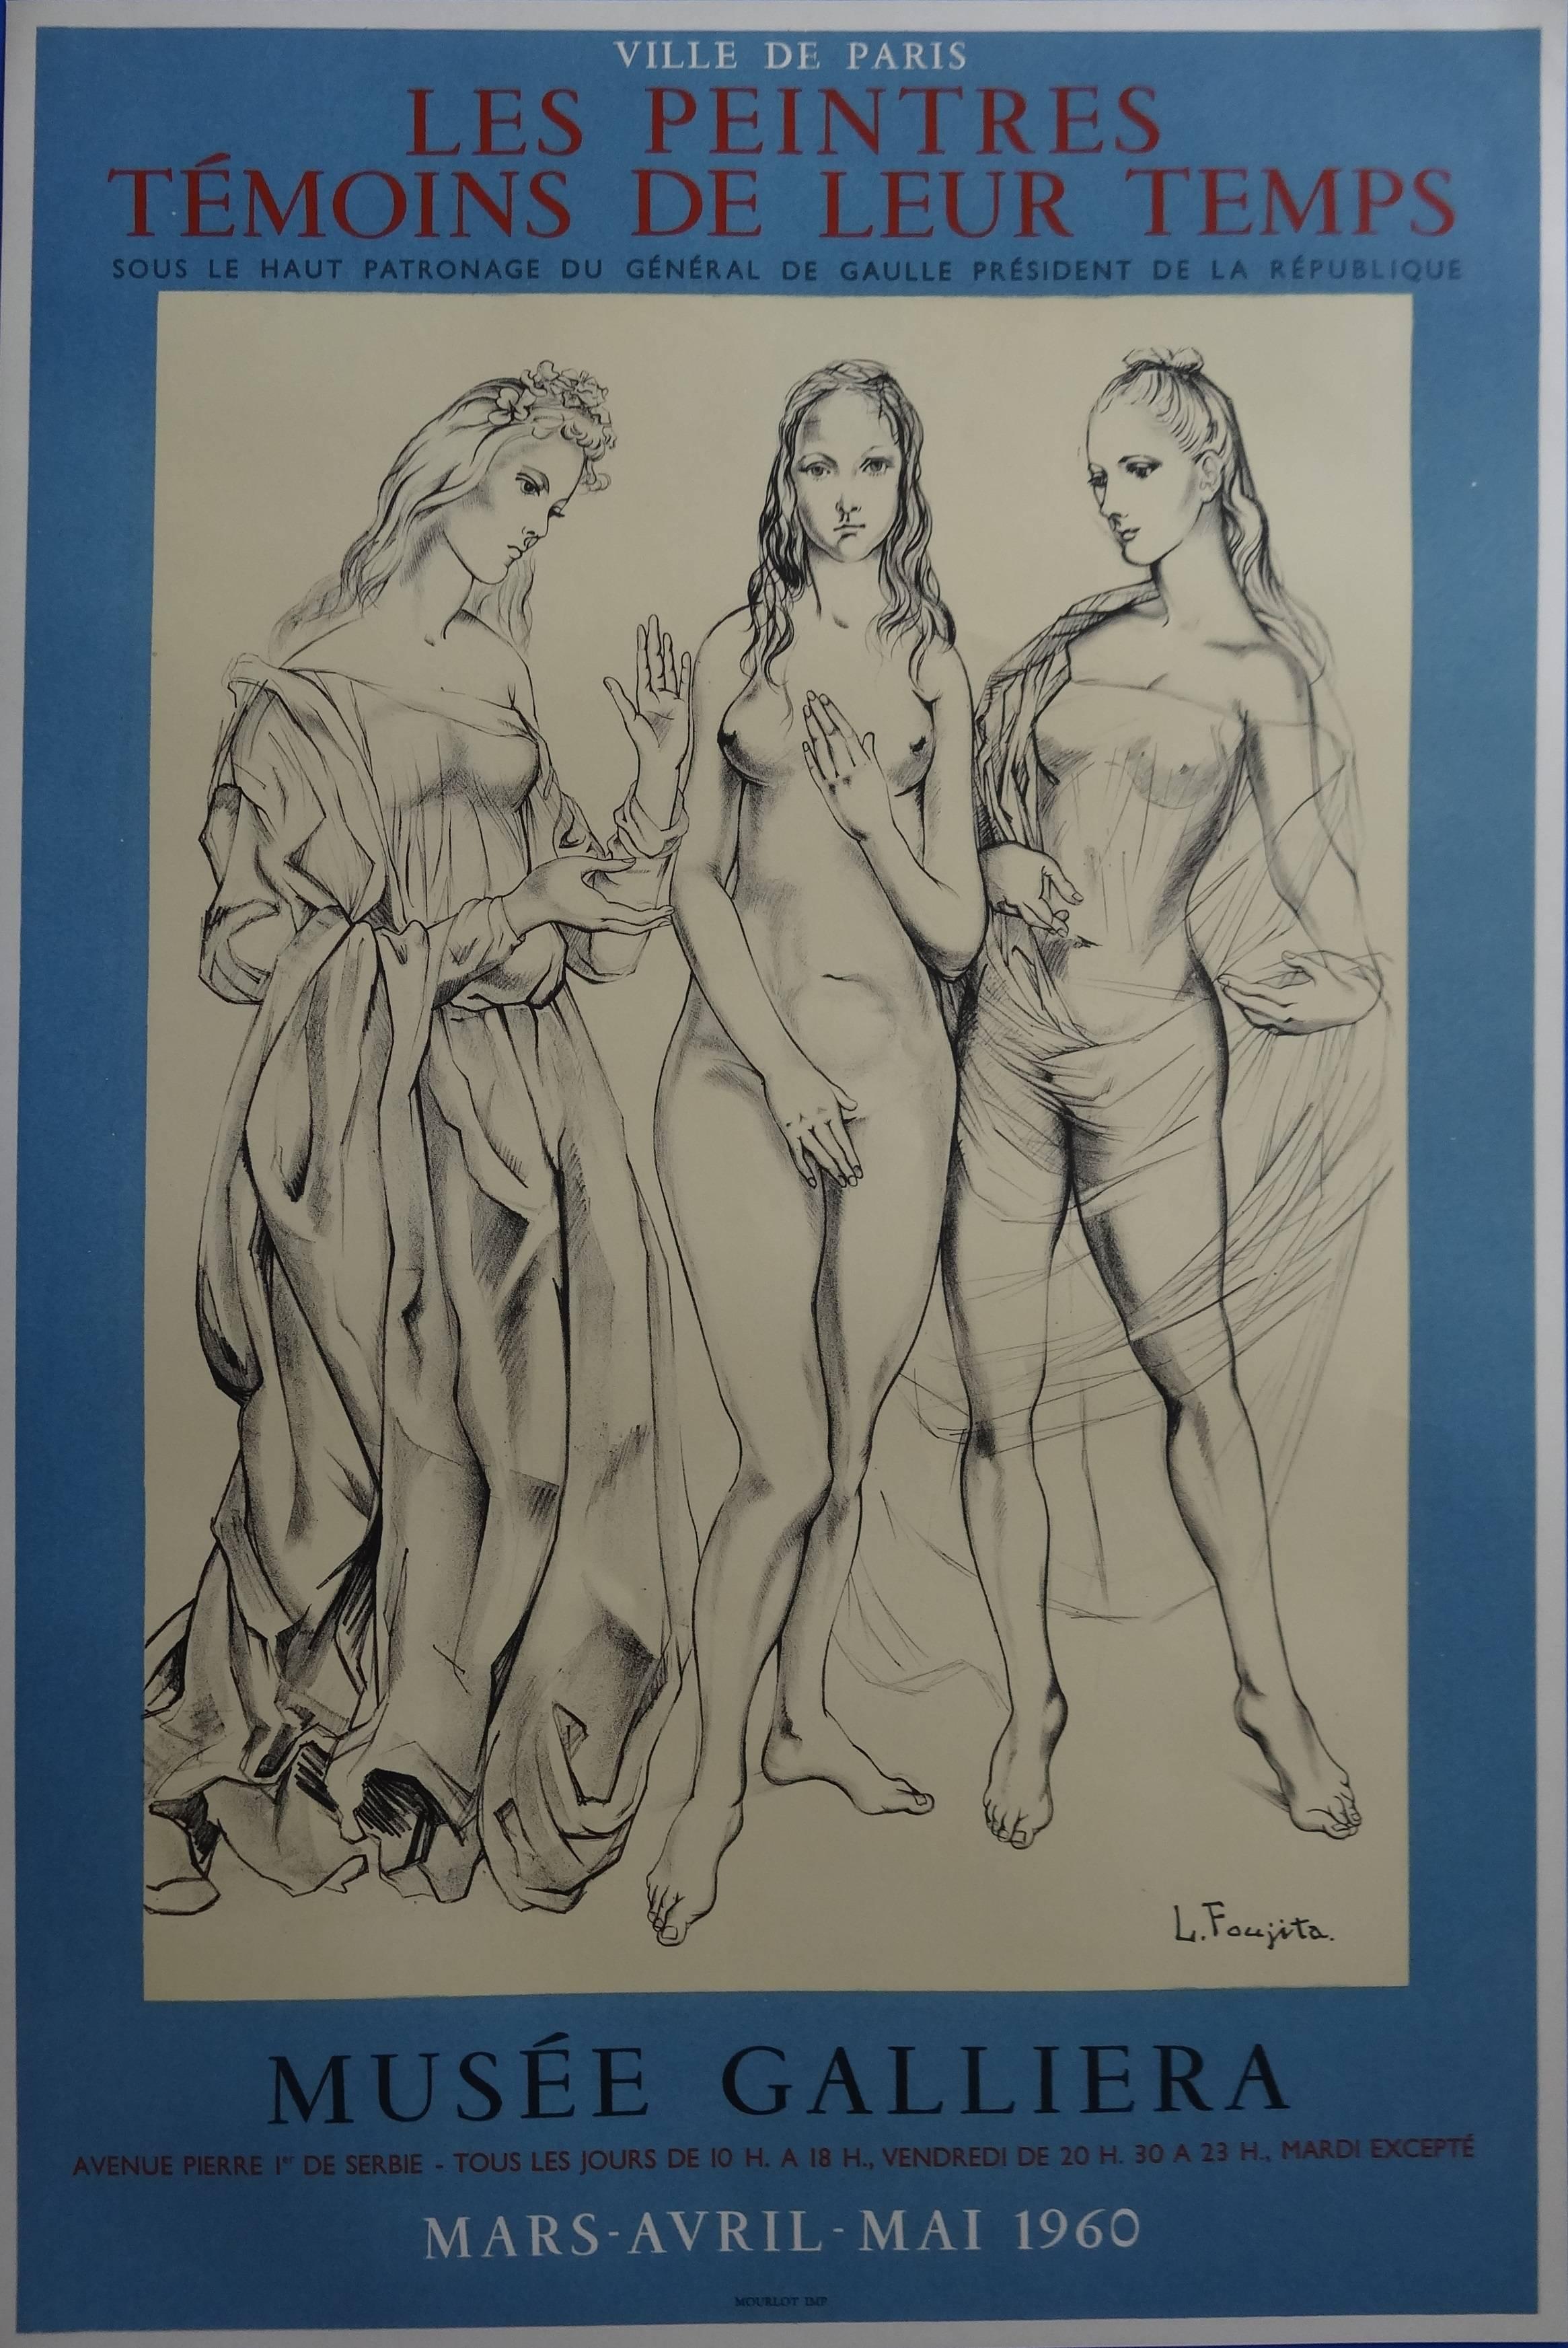 Léonard Tsugouharu Foujita Nude Print - Three Graces - Original lithograph poster - Plate signed - 1960